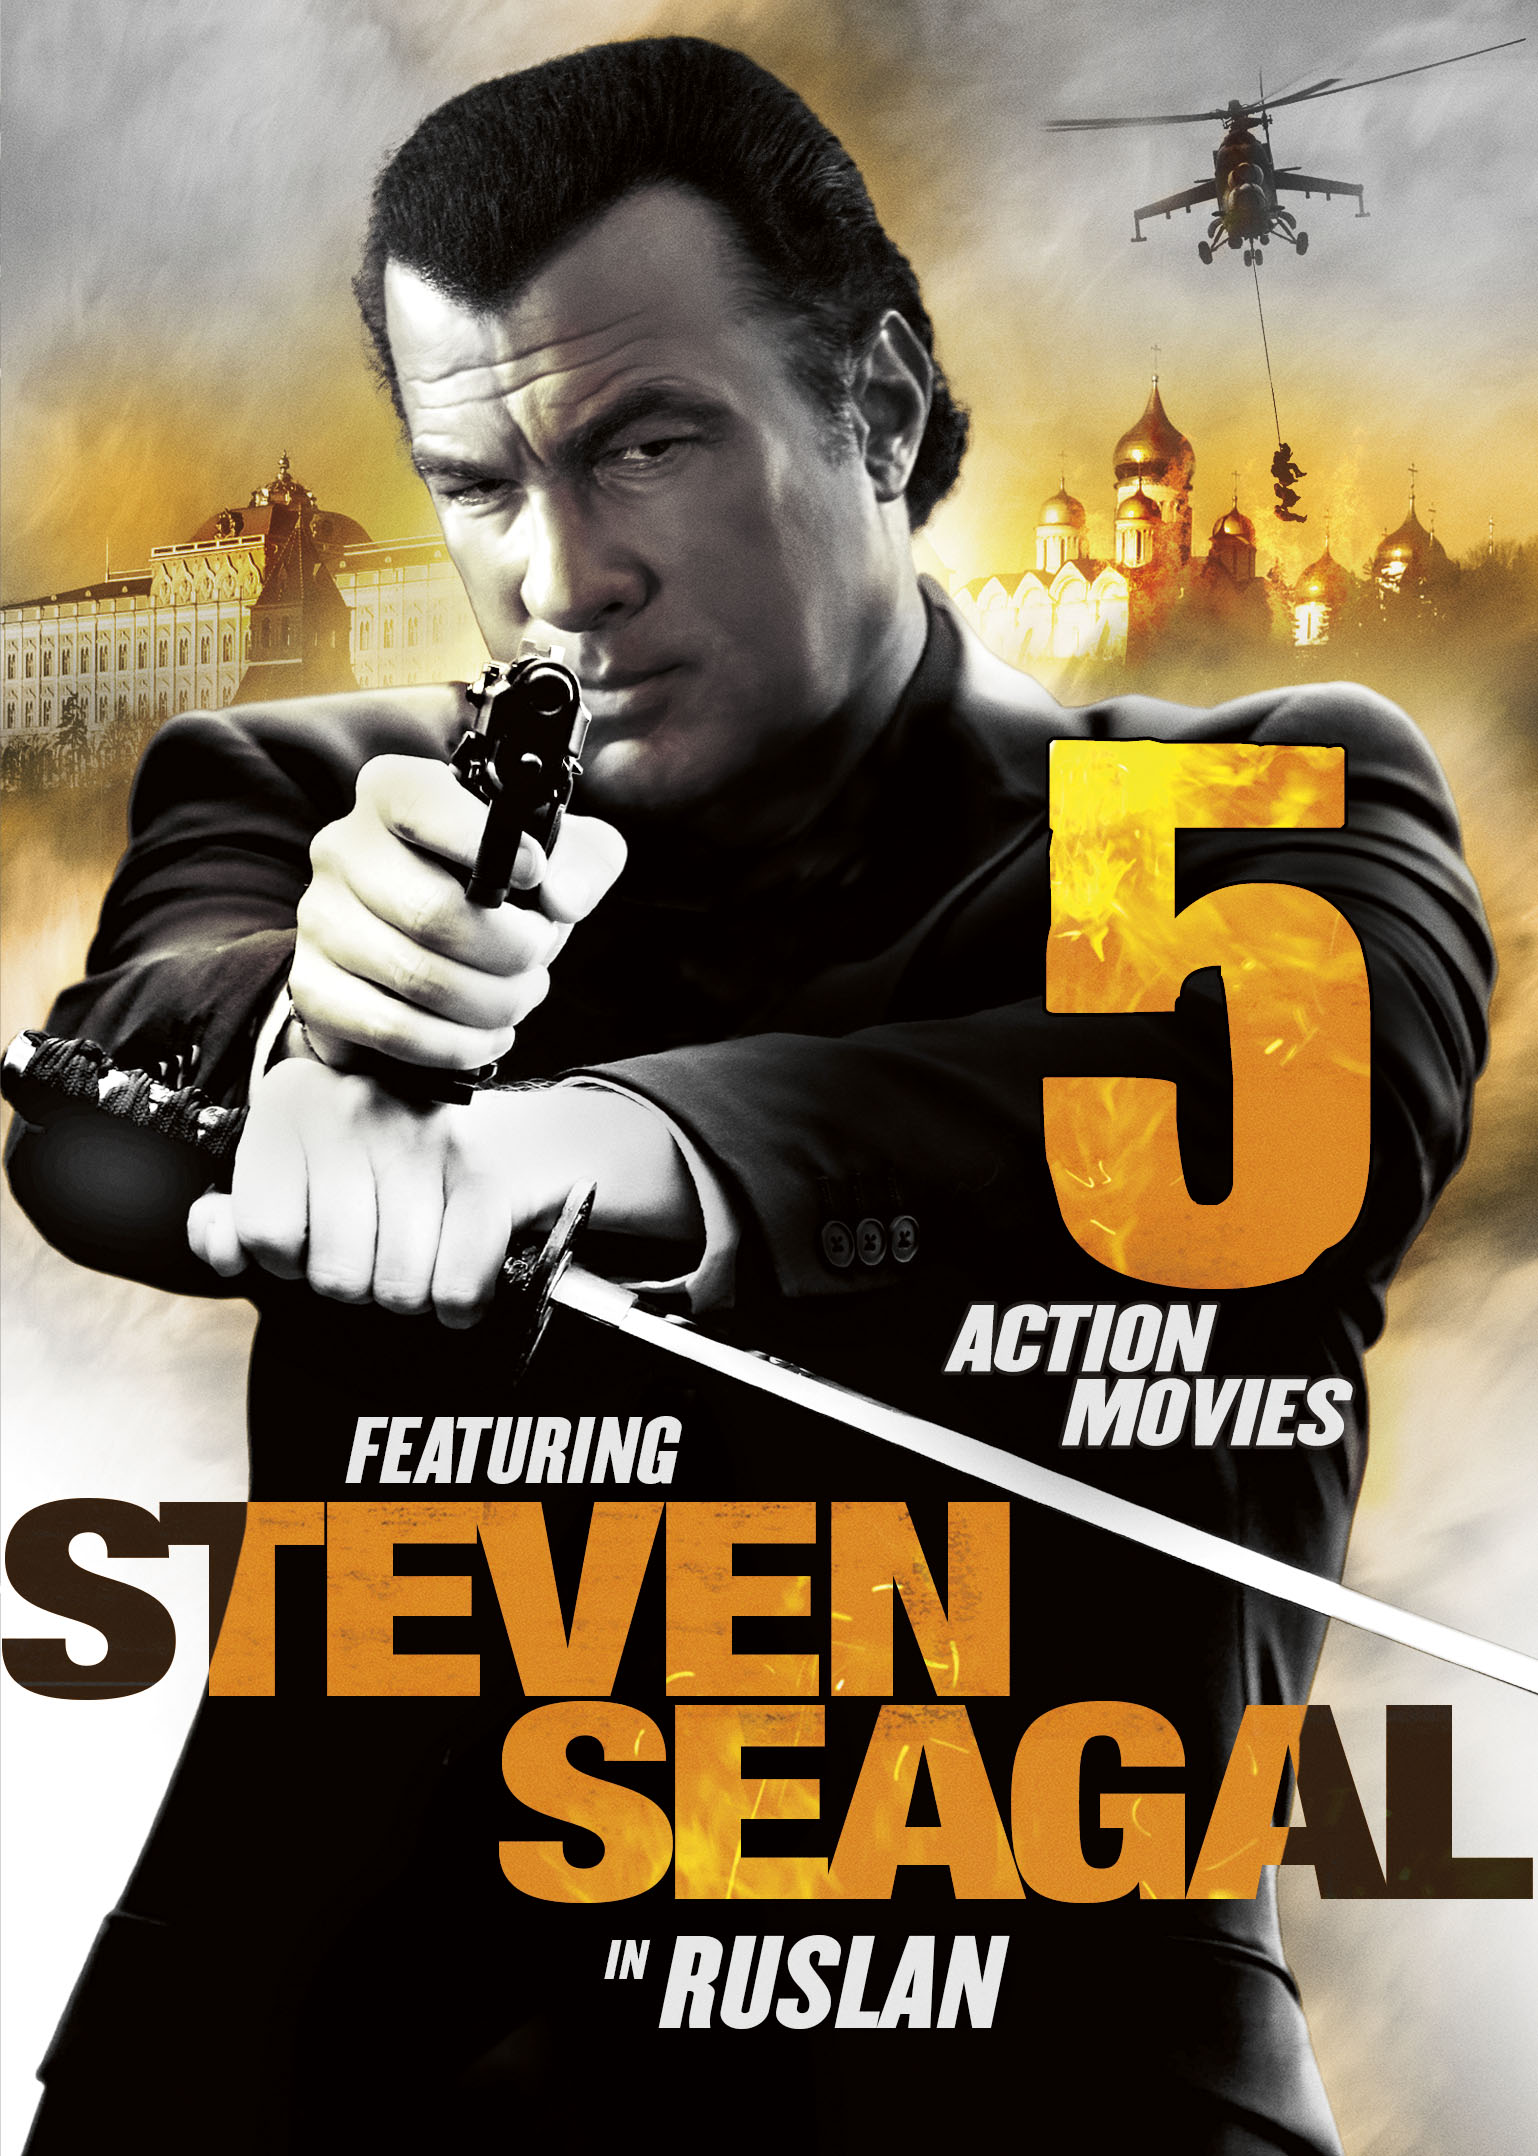 Specimen boerderij Koninklijke familie 5 Action Movies: Featuring Steven Seagal in Ruslan [DVD] - Best Buy